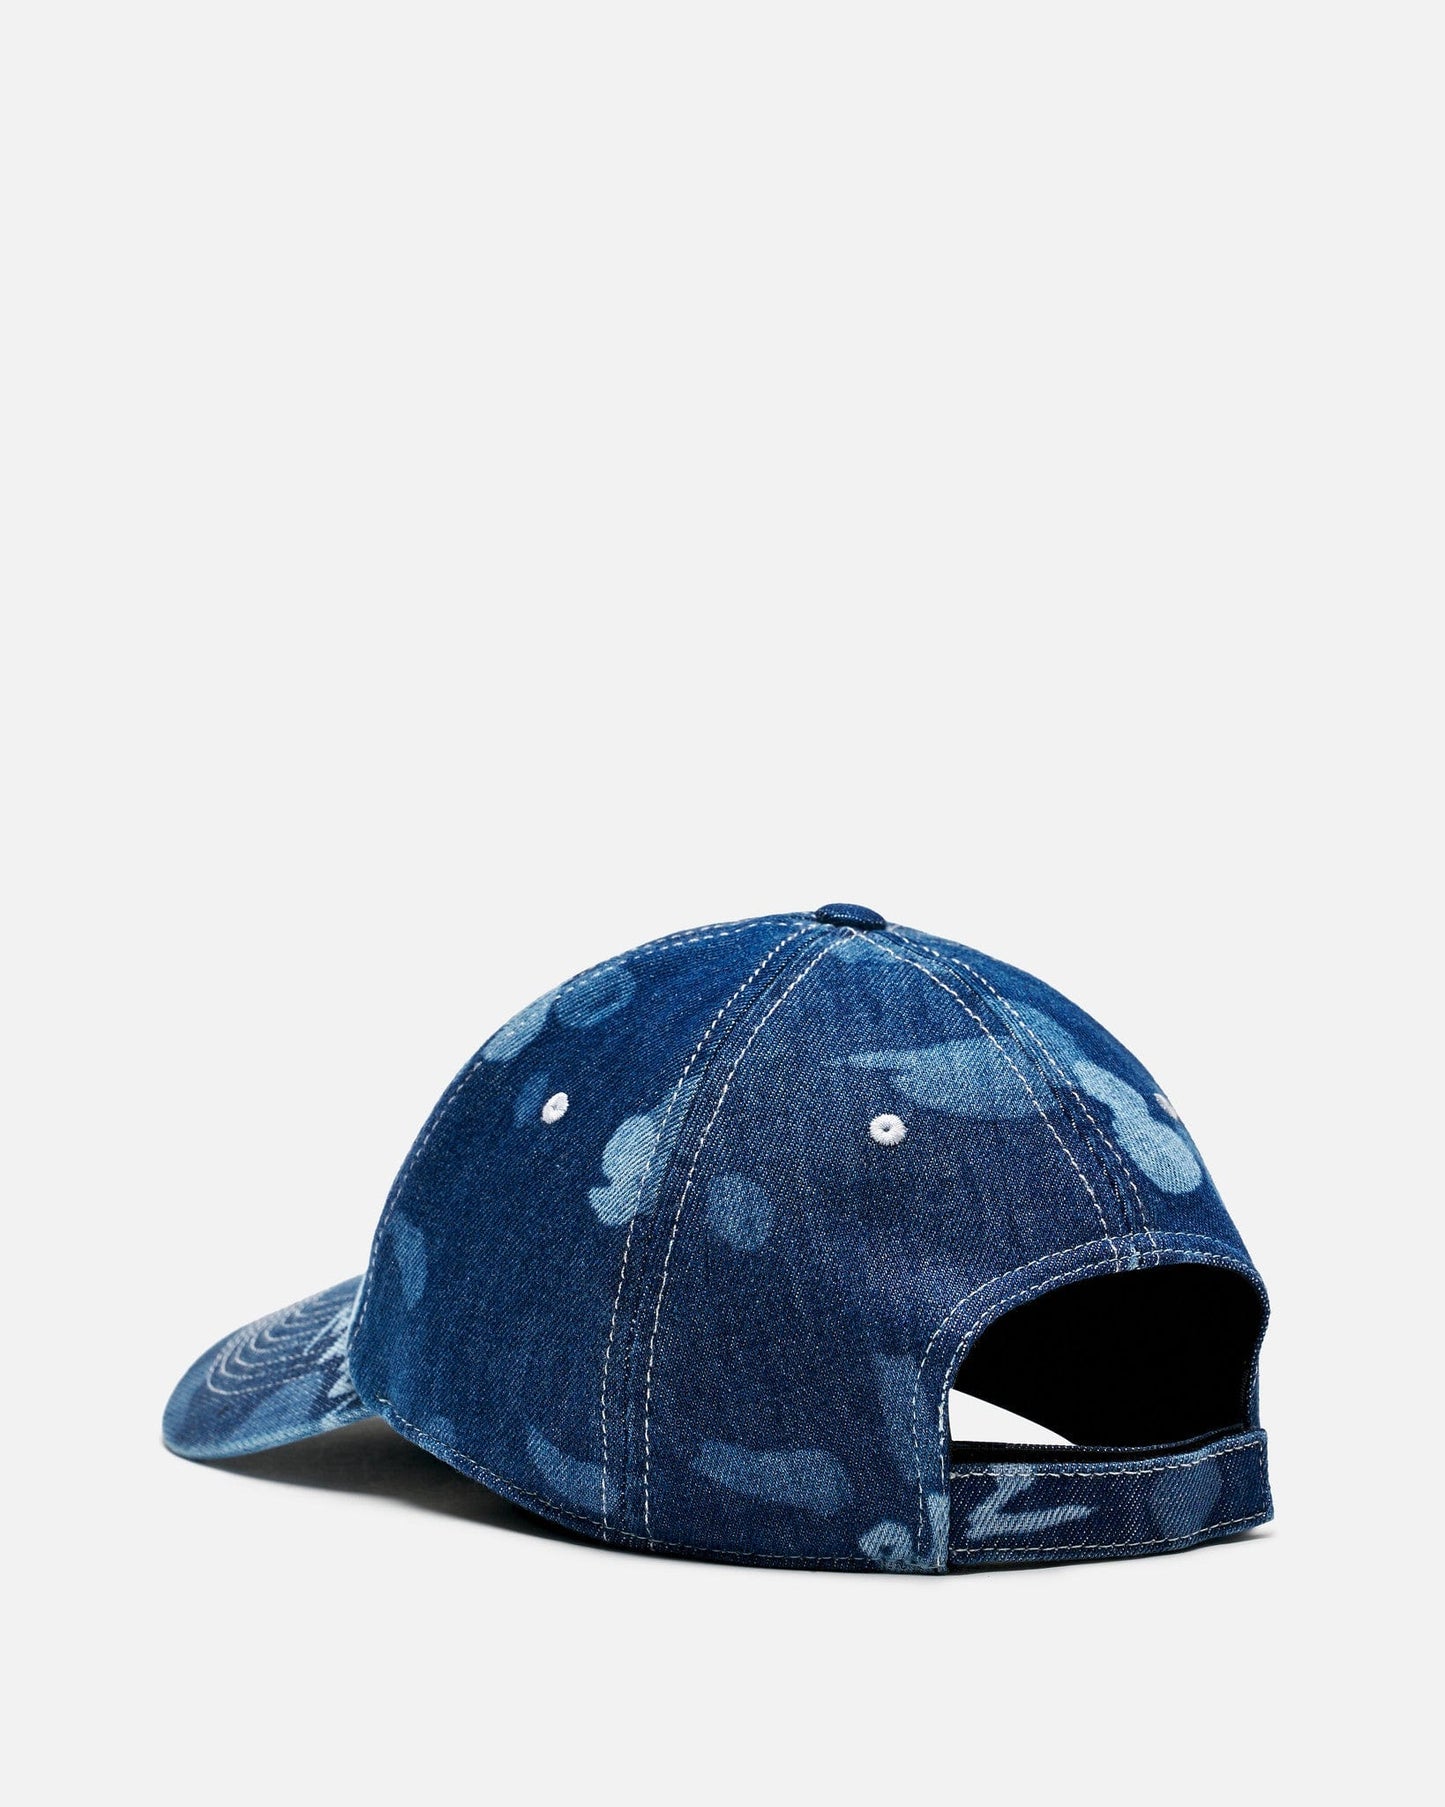 Marni Men's Hats Marni Dripping Lightweight Denim Hat in Iris Blue